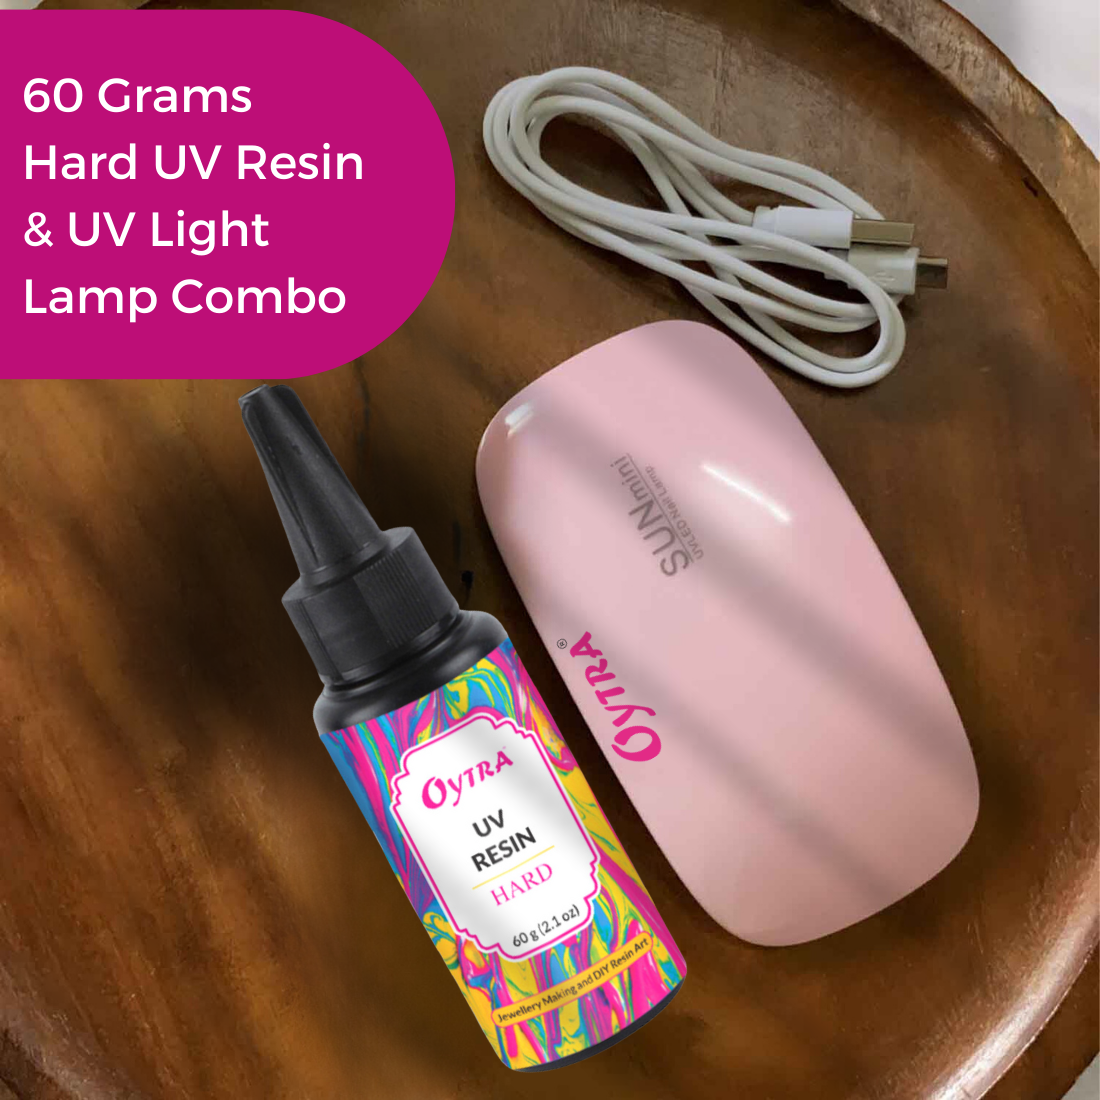 Oytra 60g UV Resin Hard and UV Lamp Combo